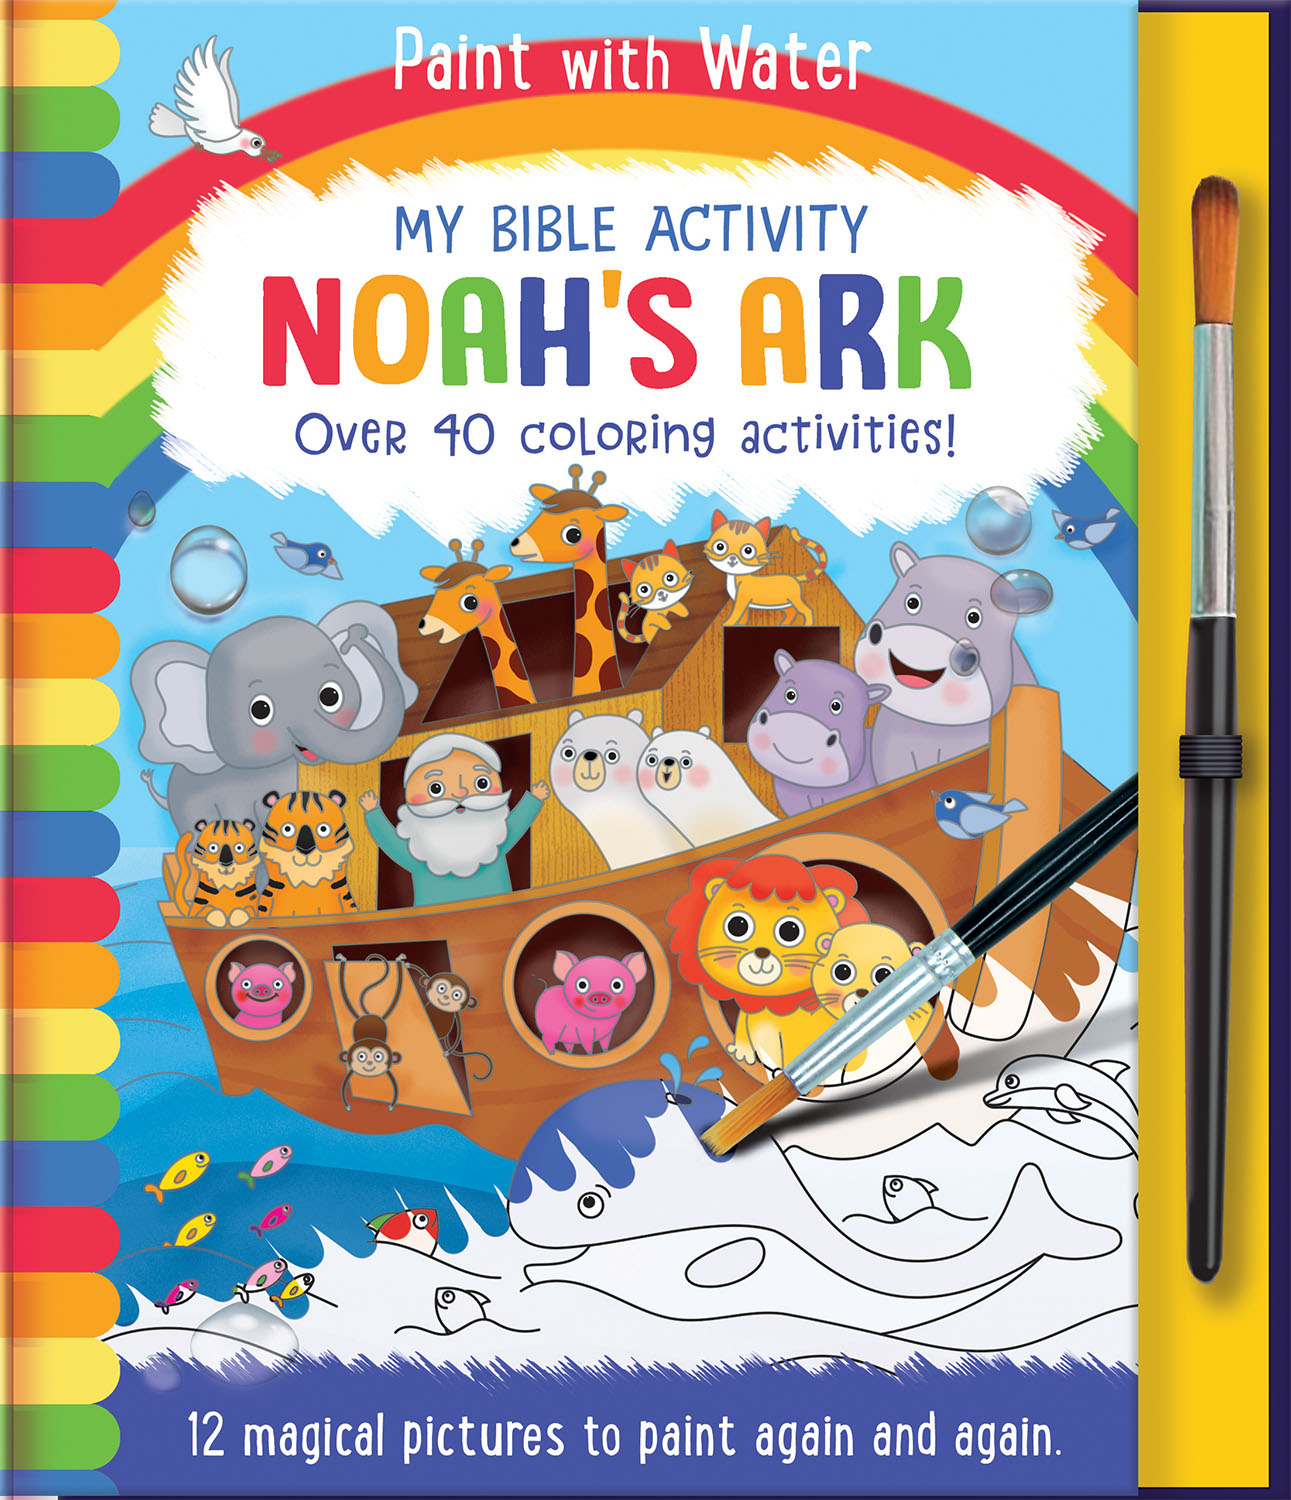 NOAH'S ARK: MY BIBLE ACTIVITY